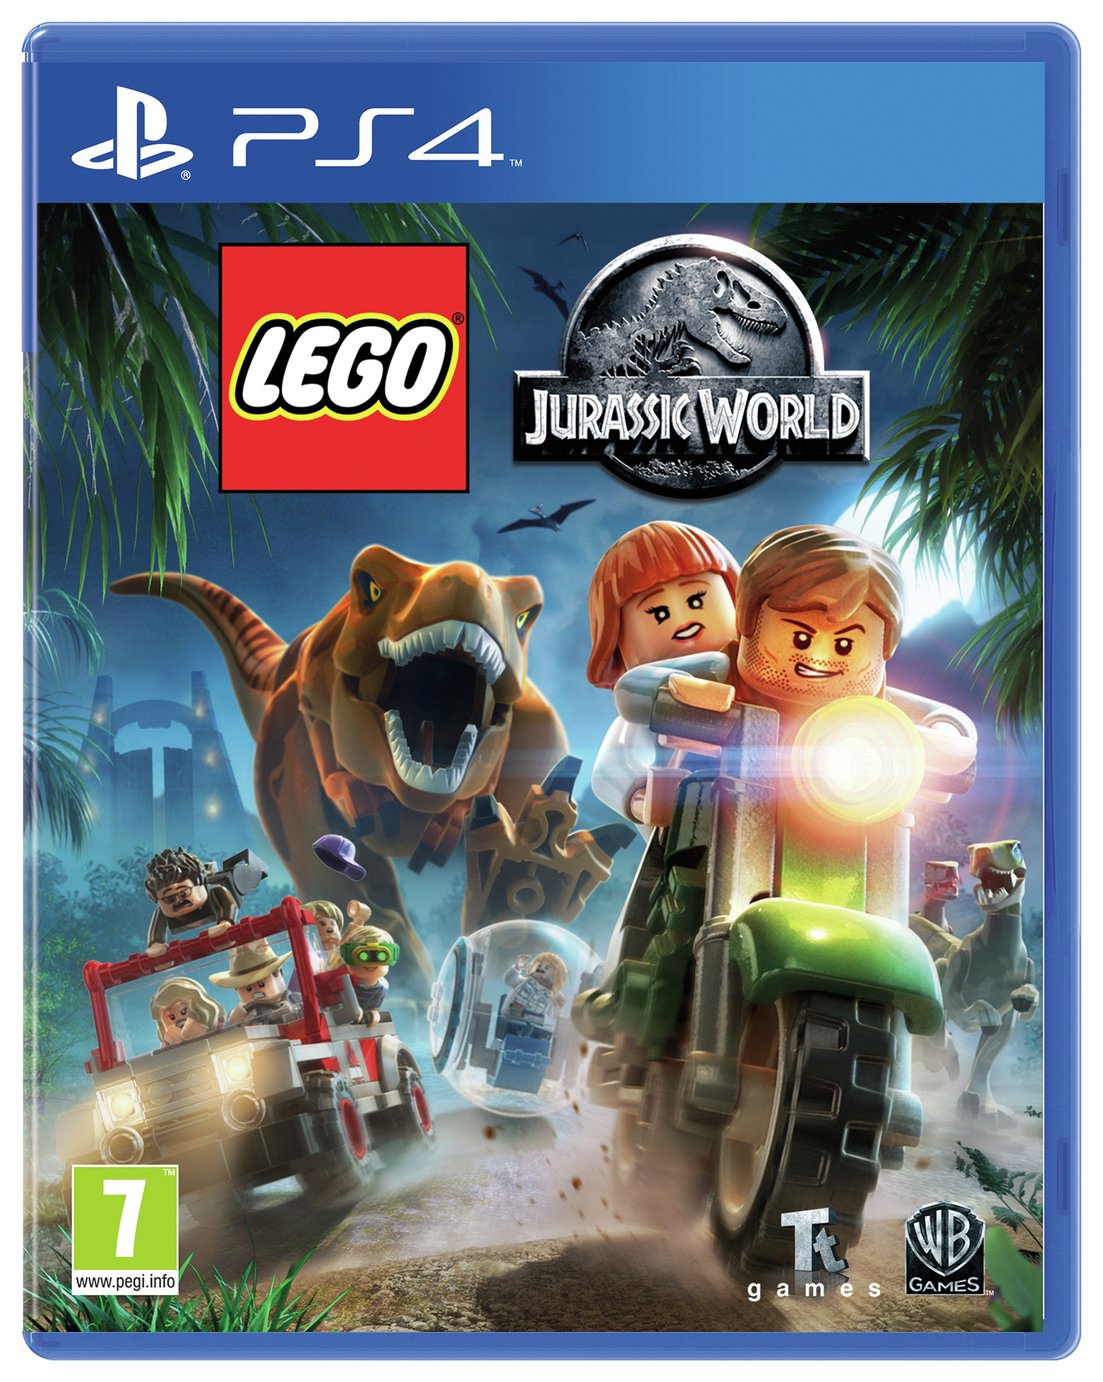 LEGO Jurassic World PS4 Game